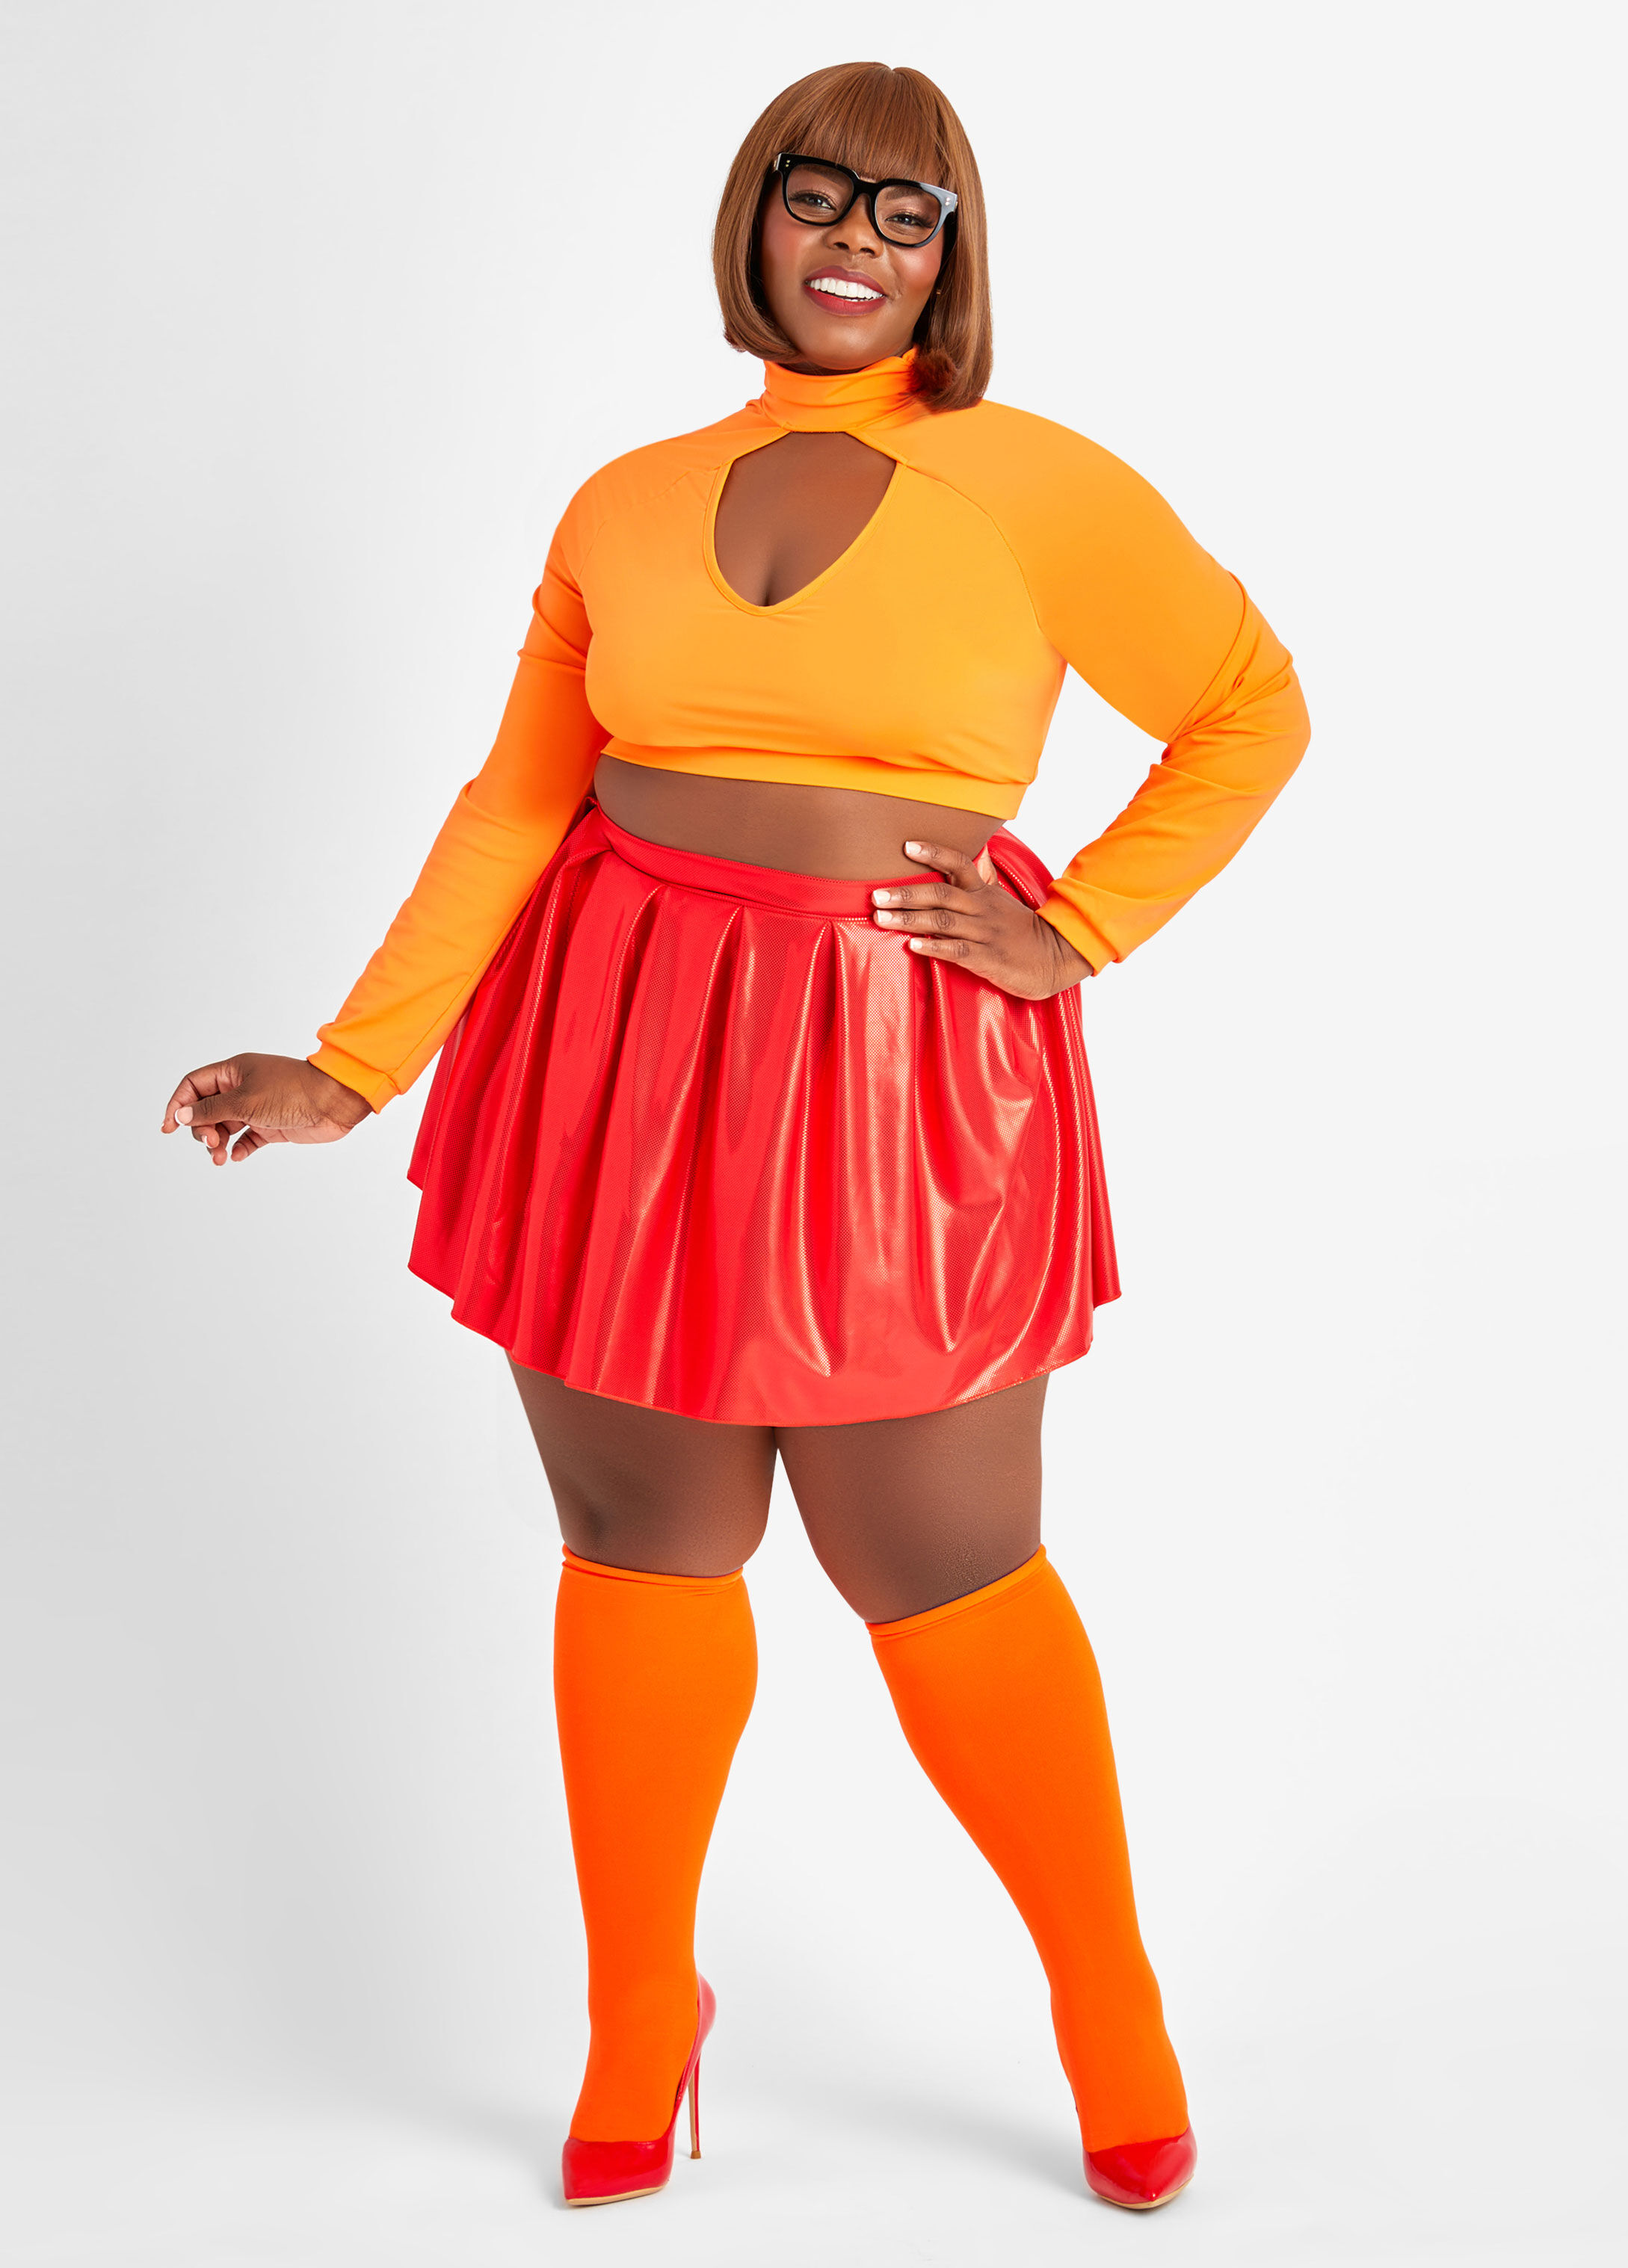 Plus Size Sexy Scooby Doo Plus Size Velma Halloween Costume photo pic picture